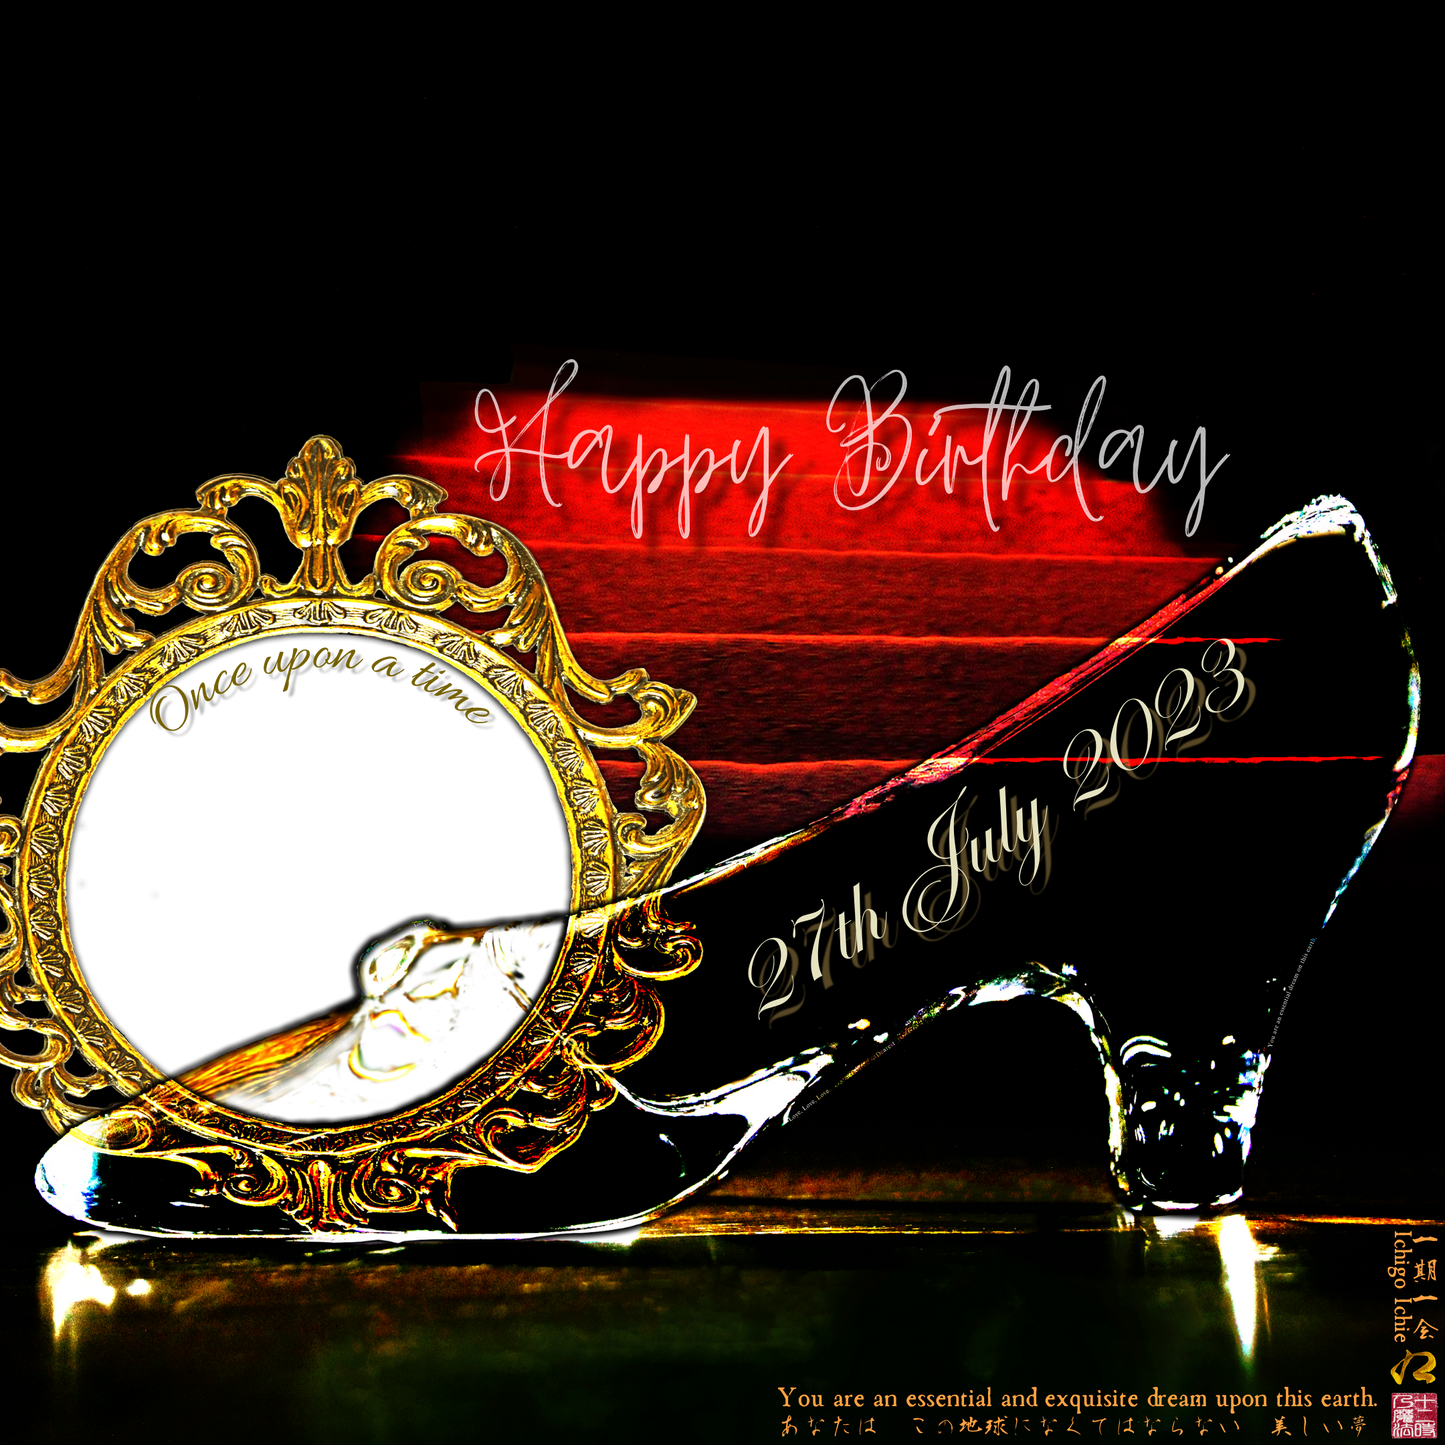 Happy Birthday Glass Slipper "Ichigo Ichie" 27th July 2023 the Left (1-of-1) NFT Art